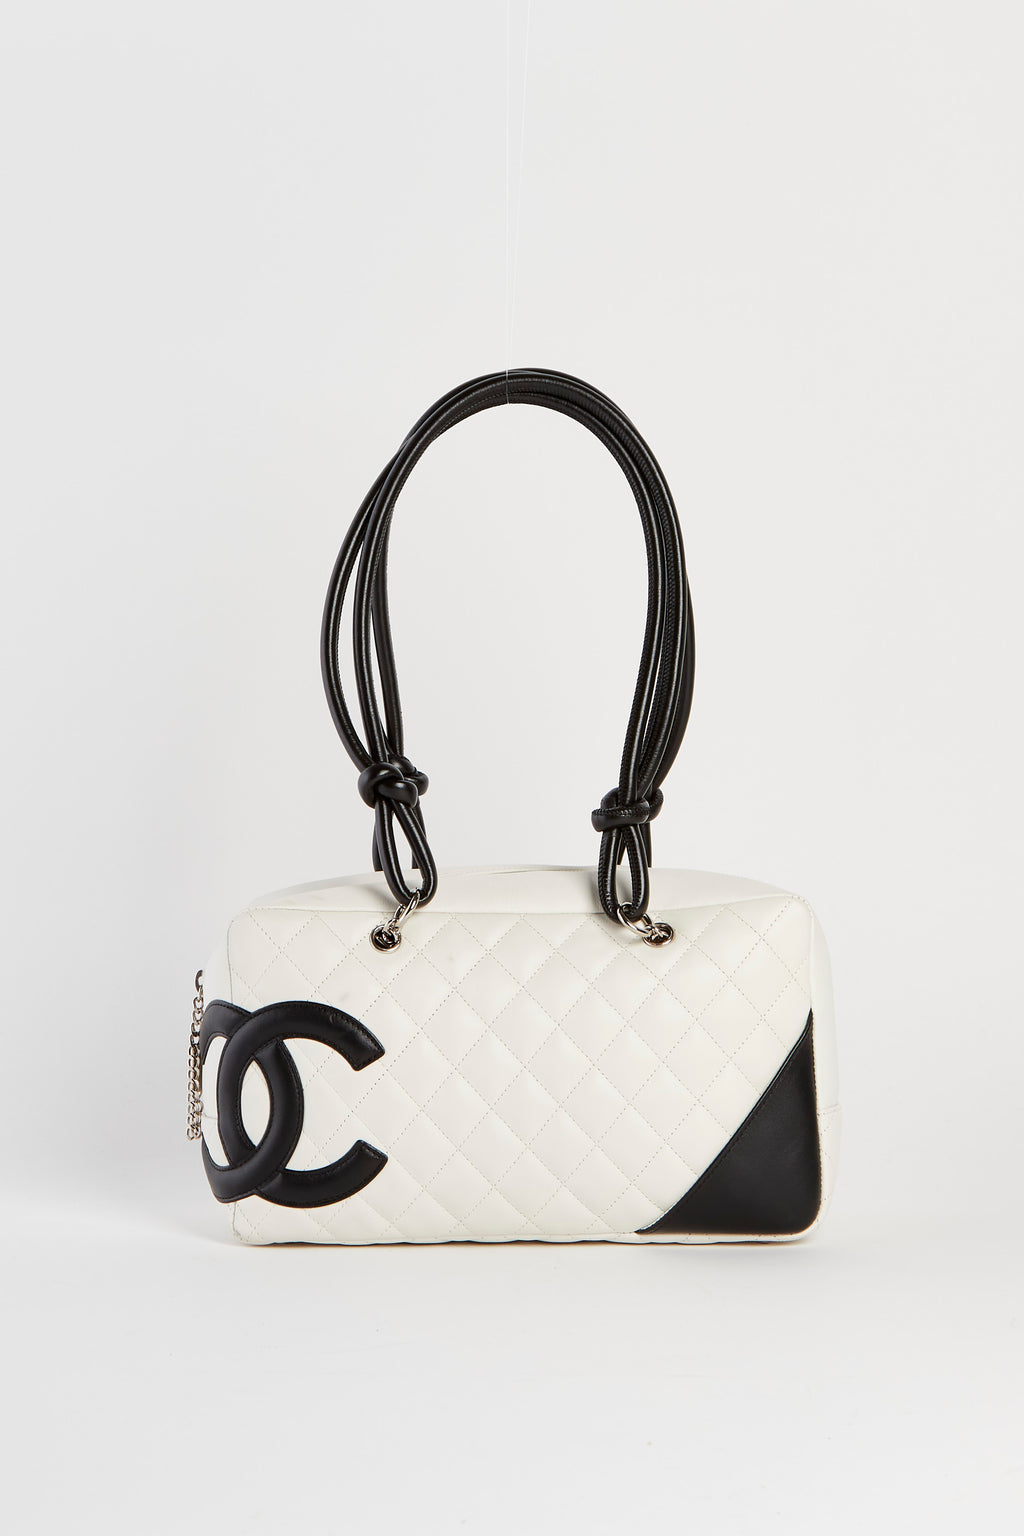 2000s Chanel Rue Cambon White Shoulder Bag